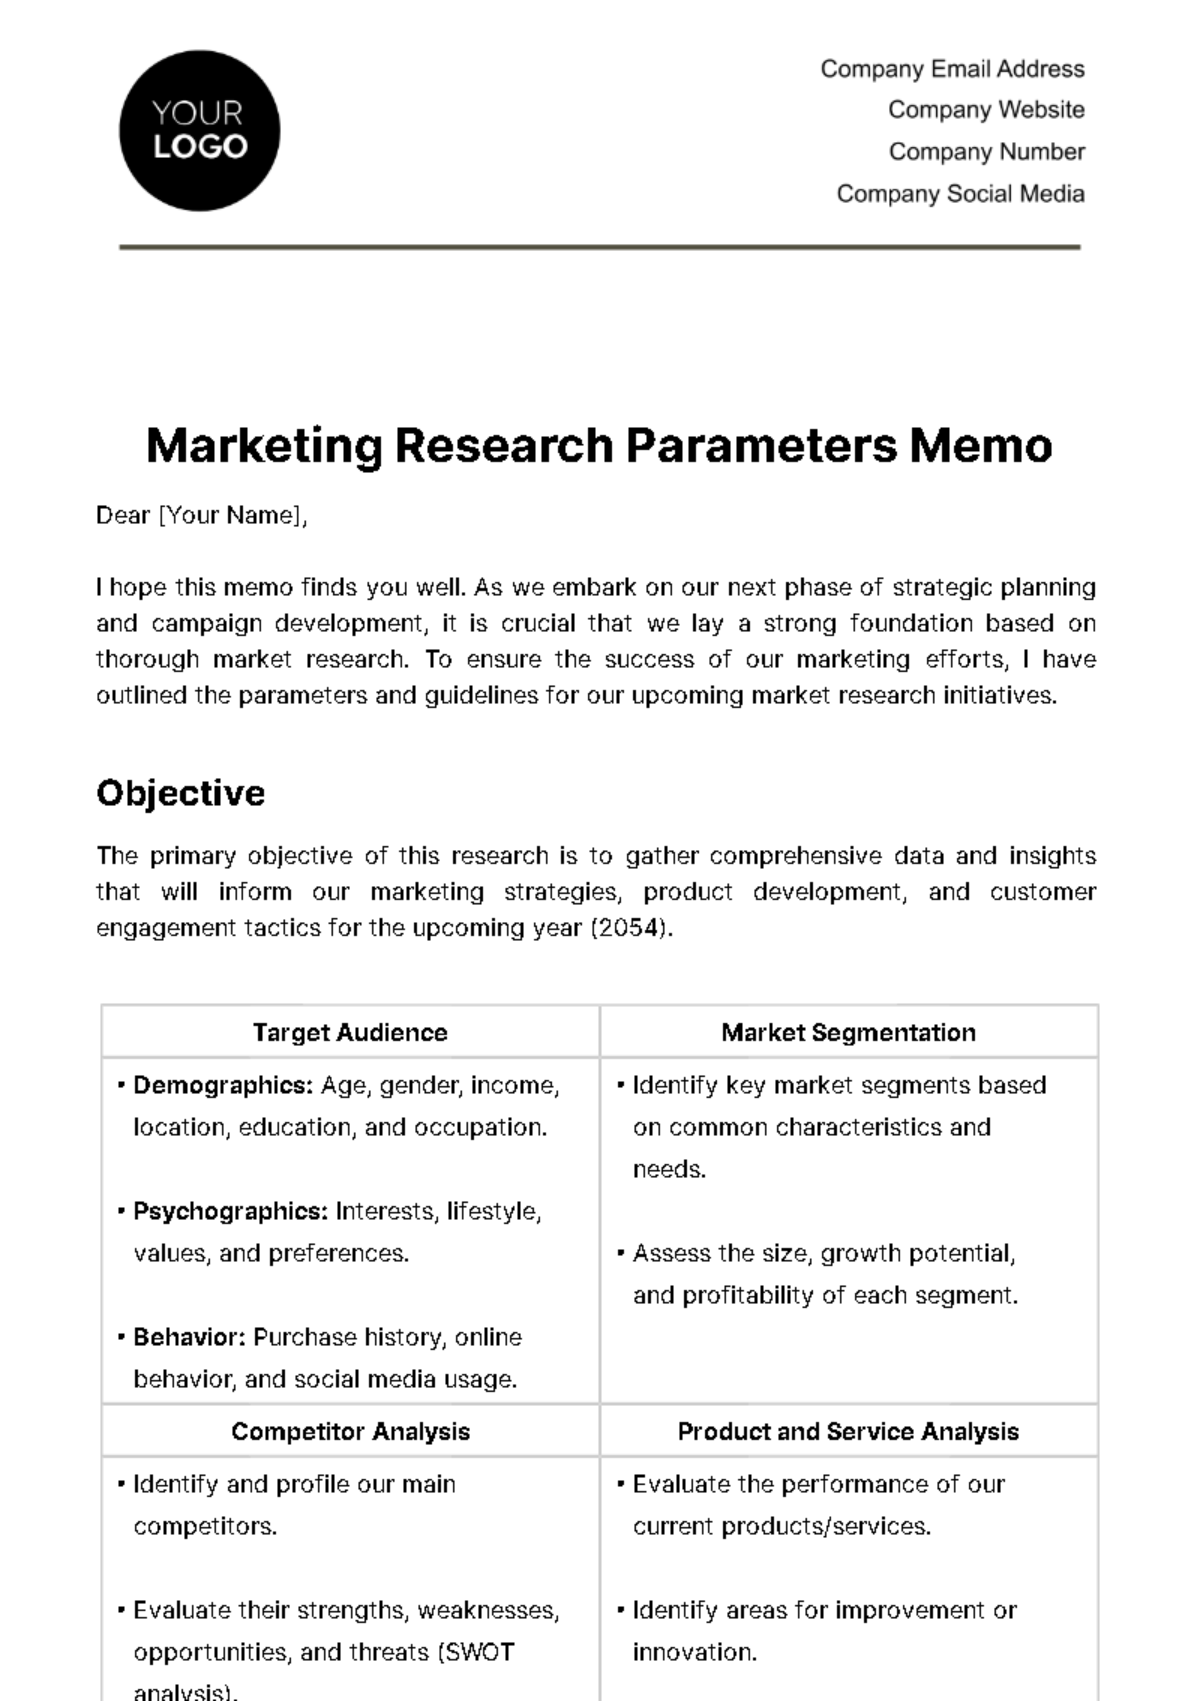 Free Marketing Research Parameters Memo Template